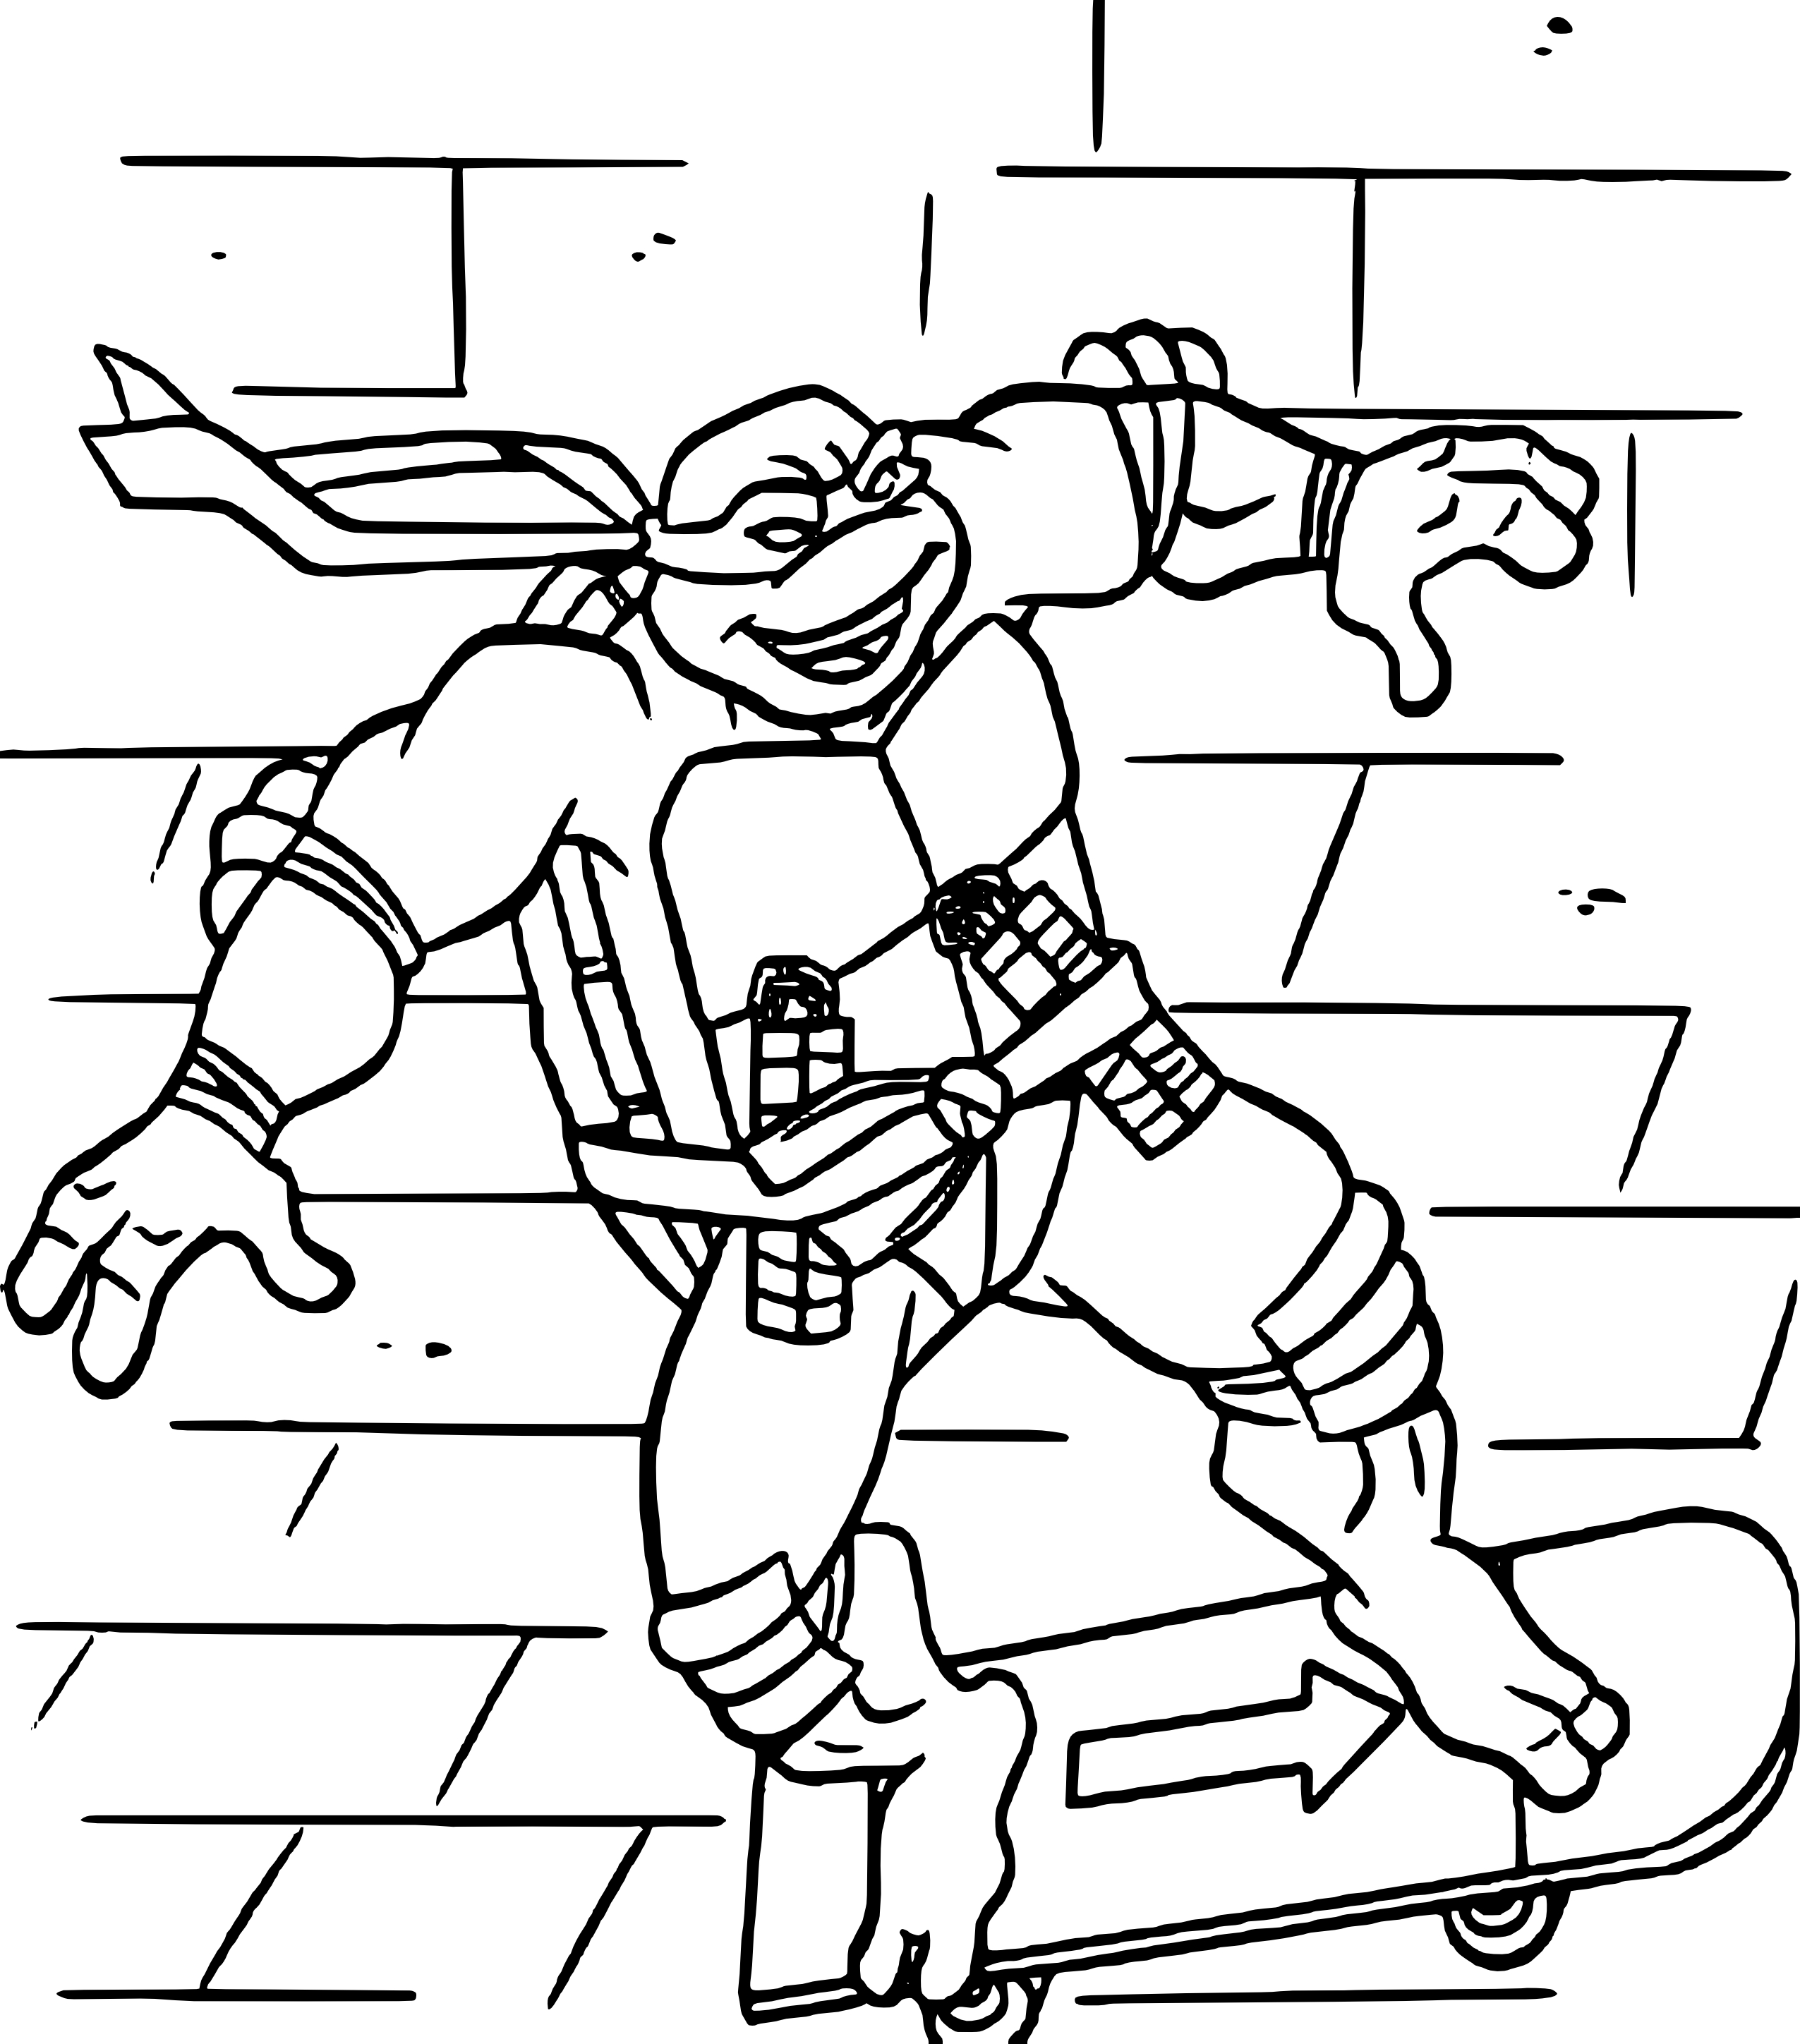 Michelangelo Ninja Turtle coloring page